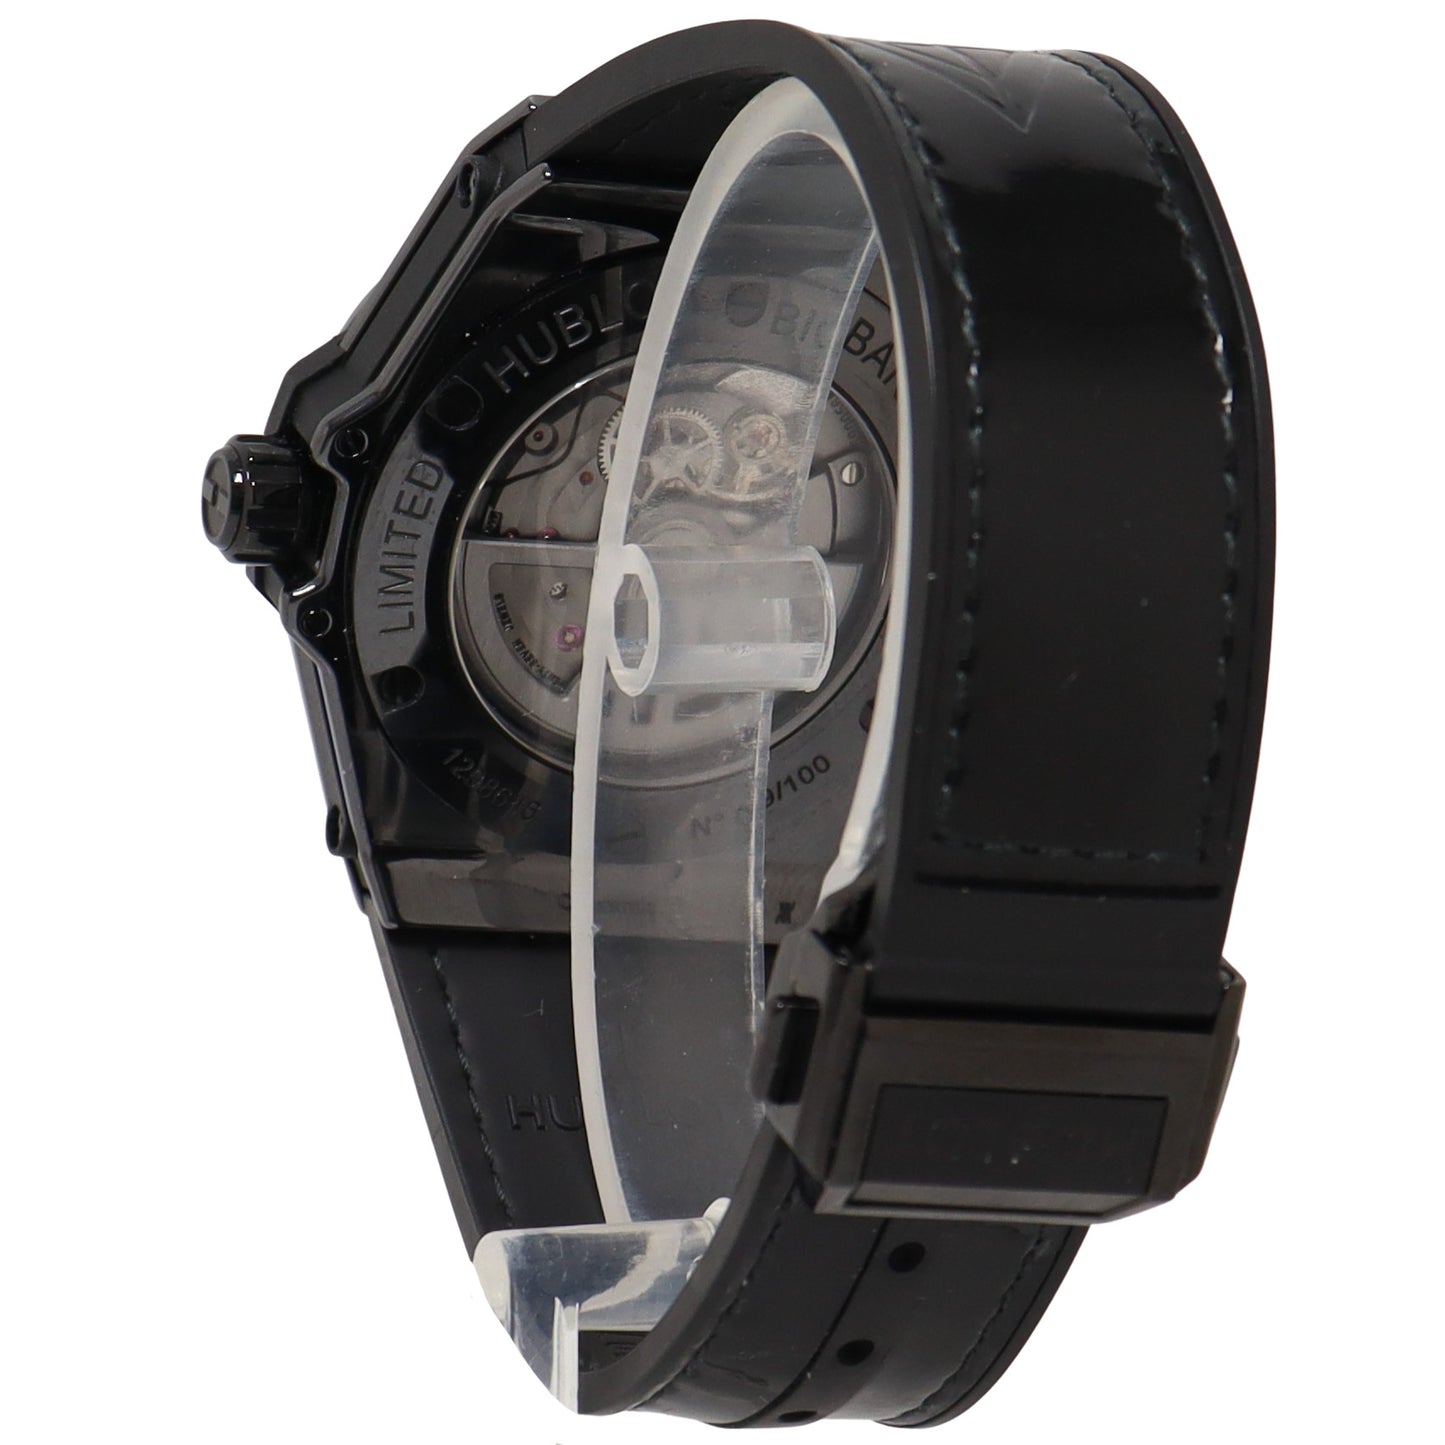 Hublot 301.SB.131.RX Big Bang Custom Diamond Watch Black Dial on Rubber  Strap